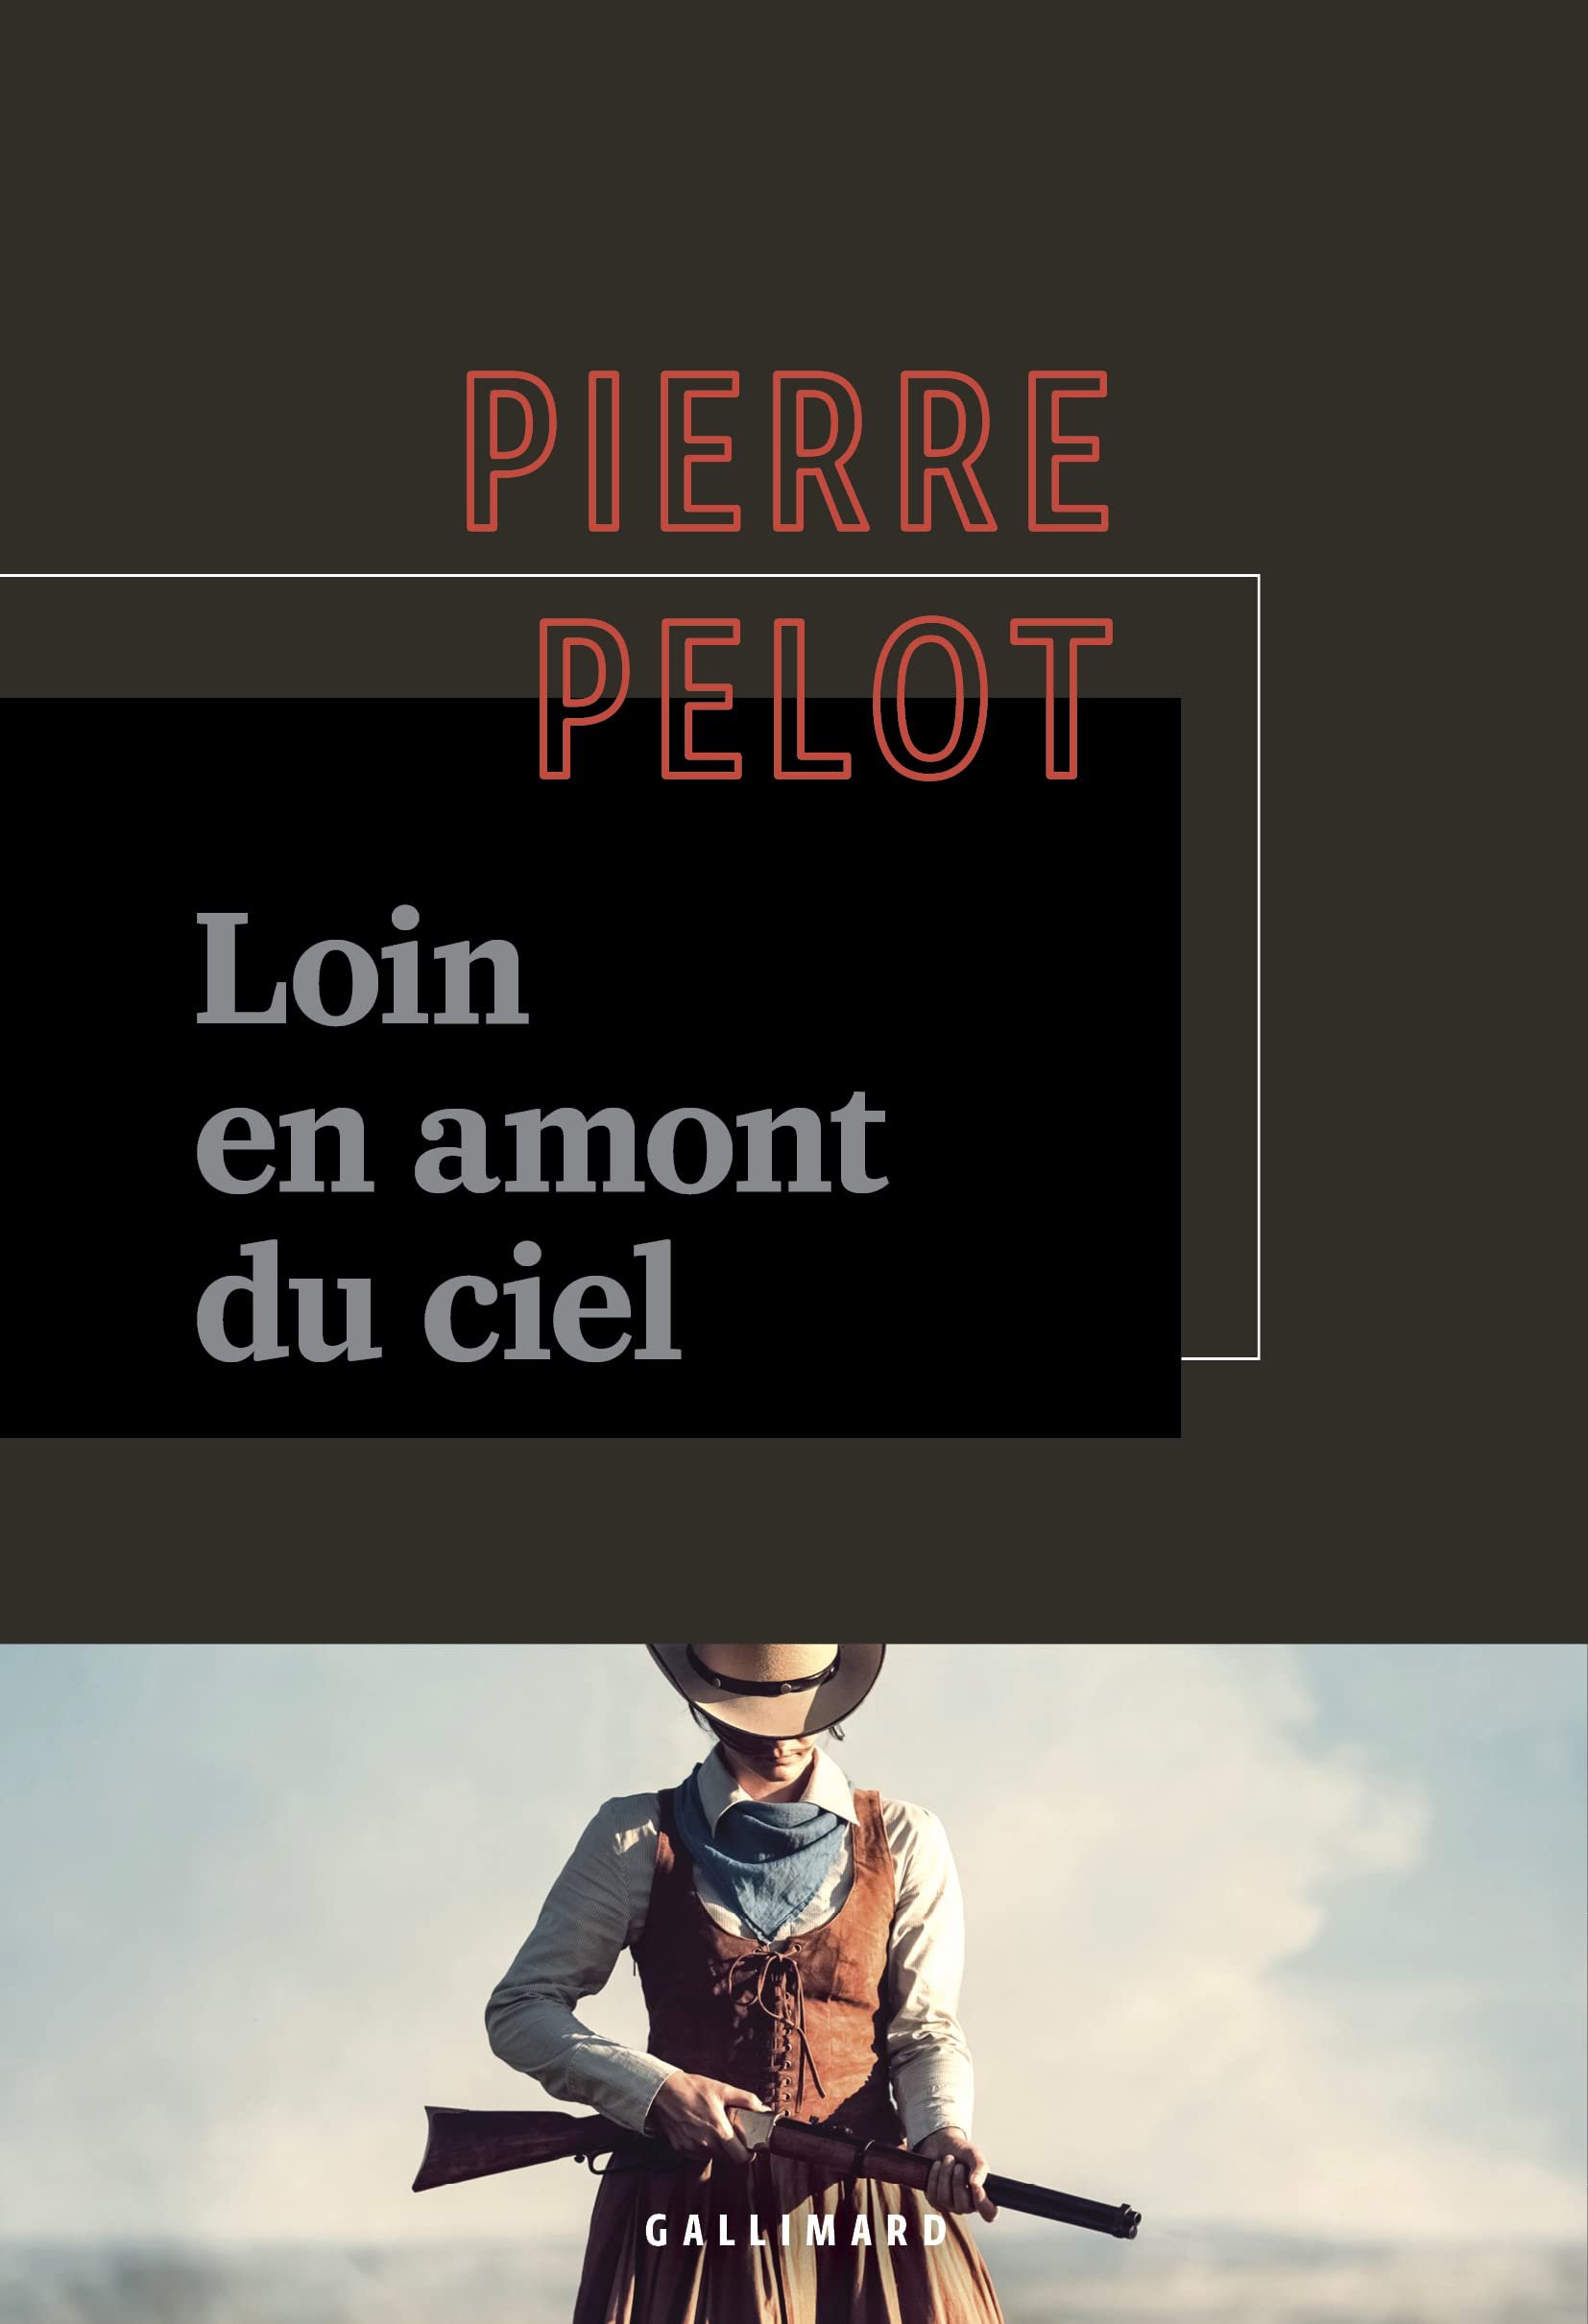 Pierre Pelot – Loin en amont du ciel